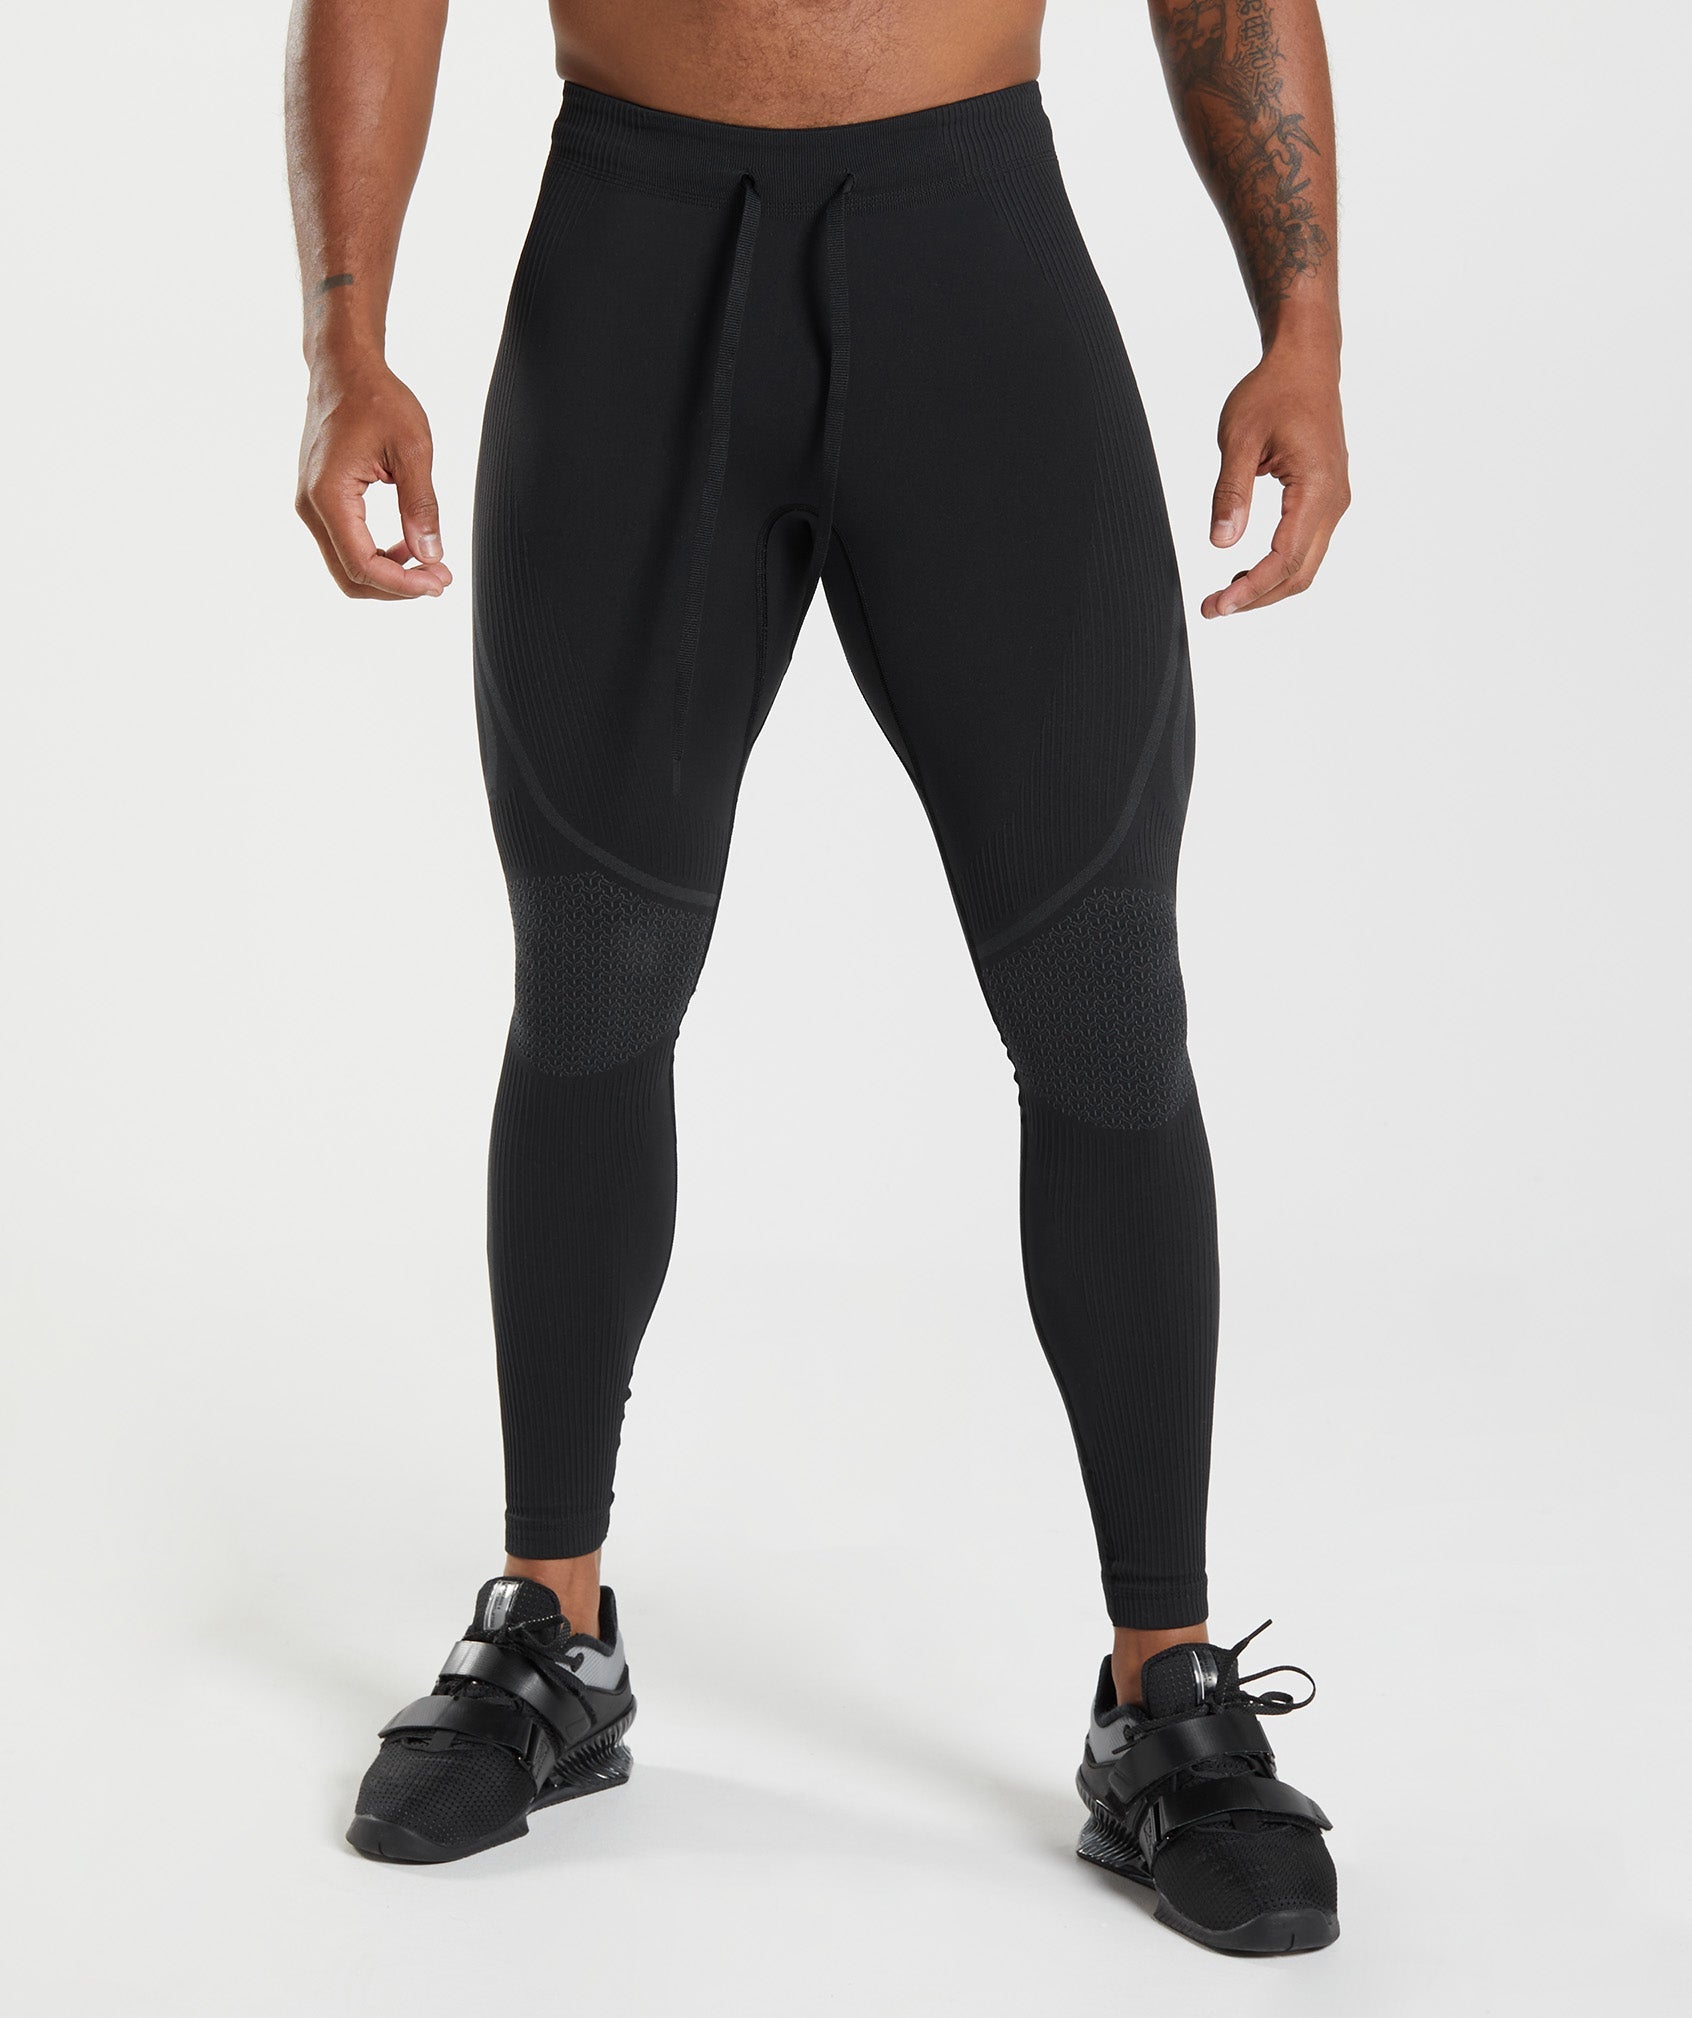 Men's Gym & Workout Pants - Gymshark